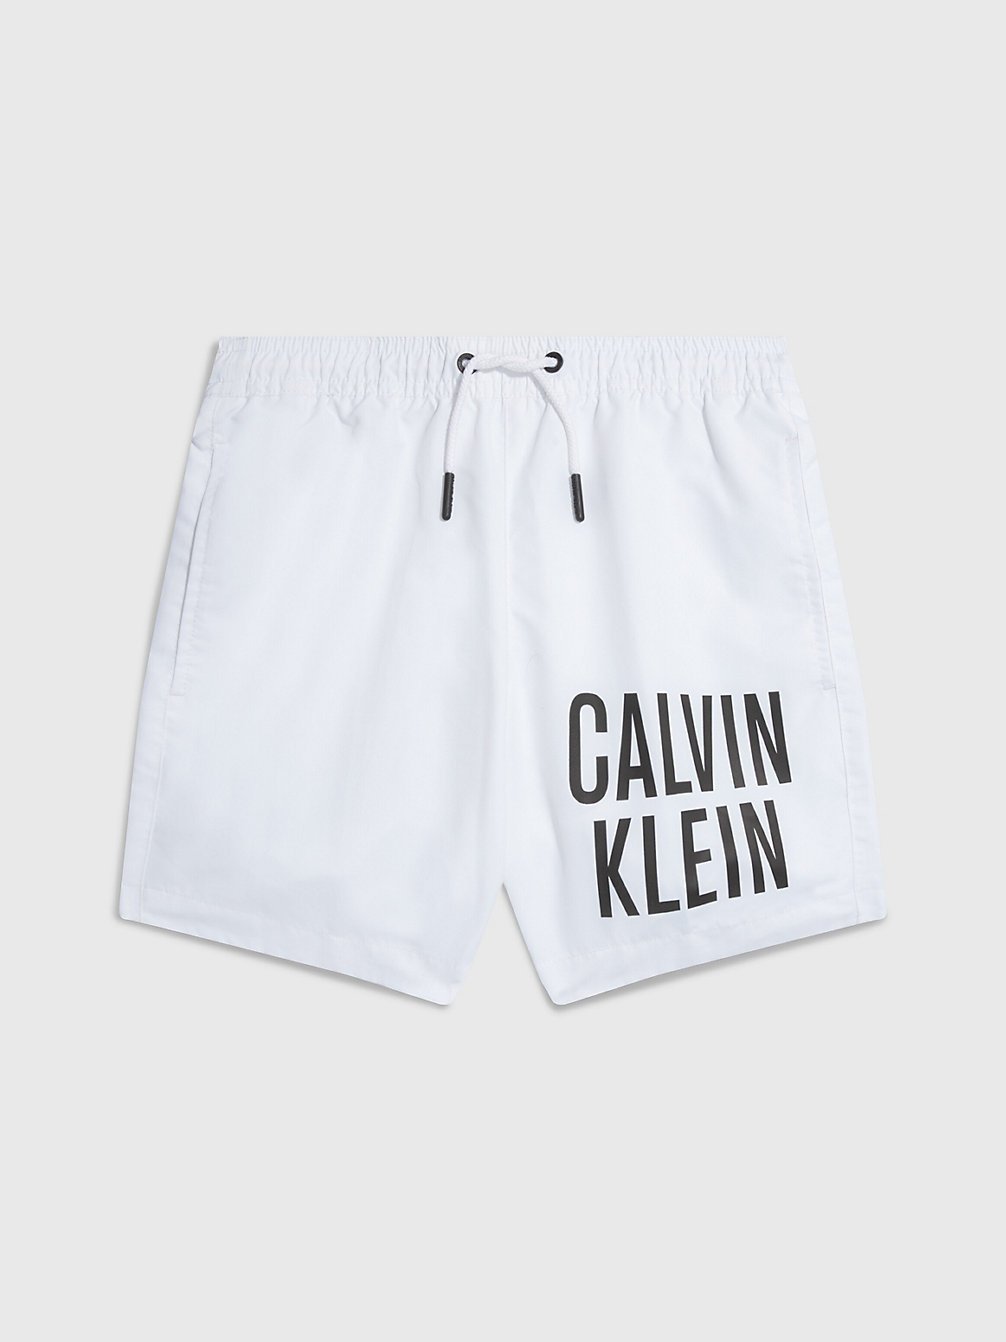 PVH CLASSIC WHITE Zwemboxer Voor Jongens - Intense Power undefined boys Calvin Klein